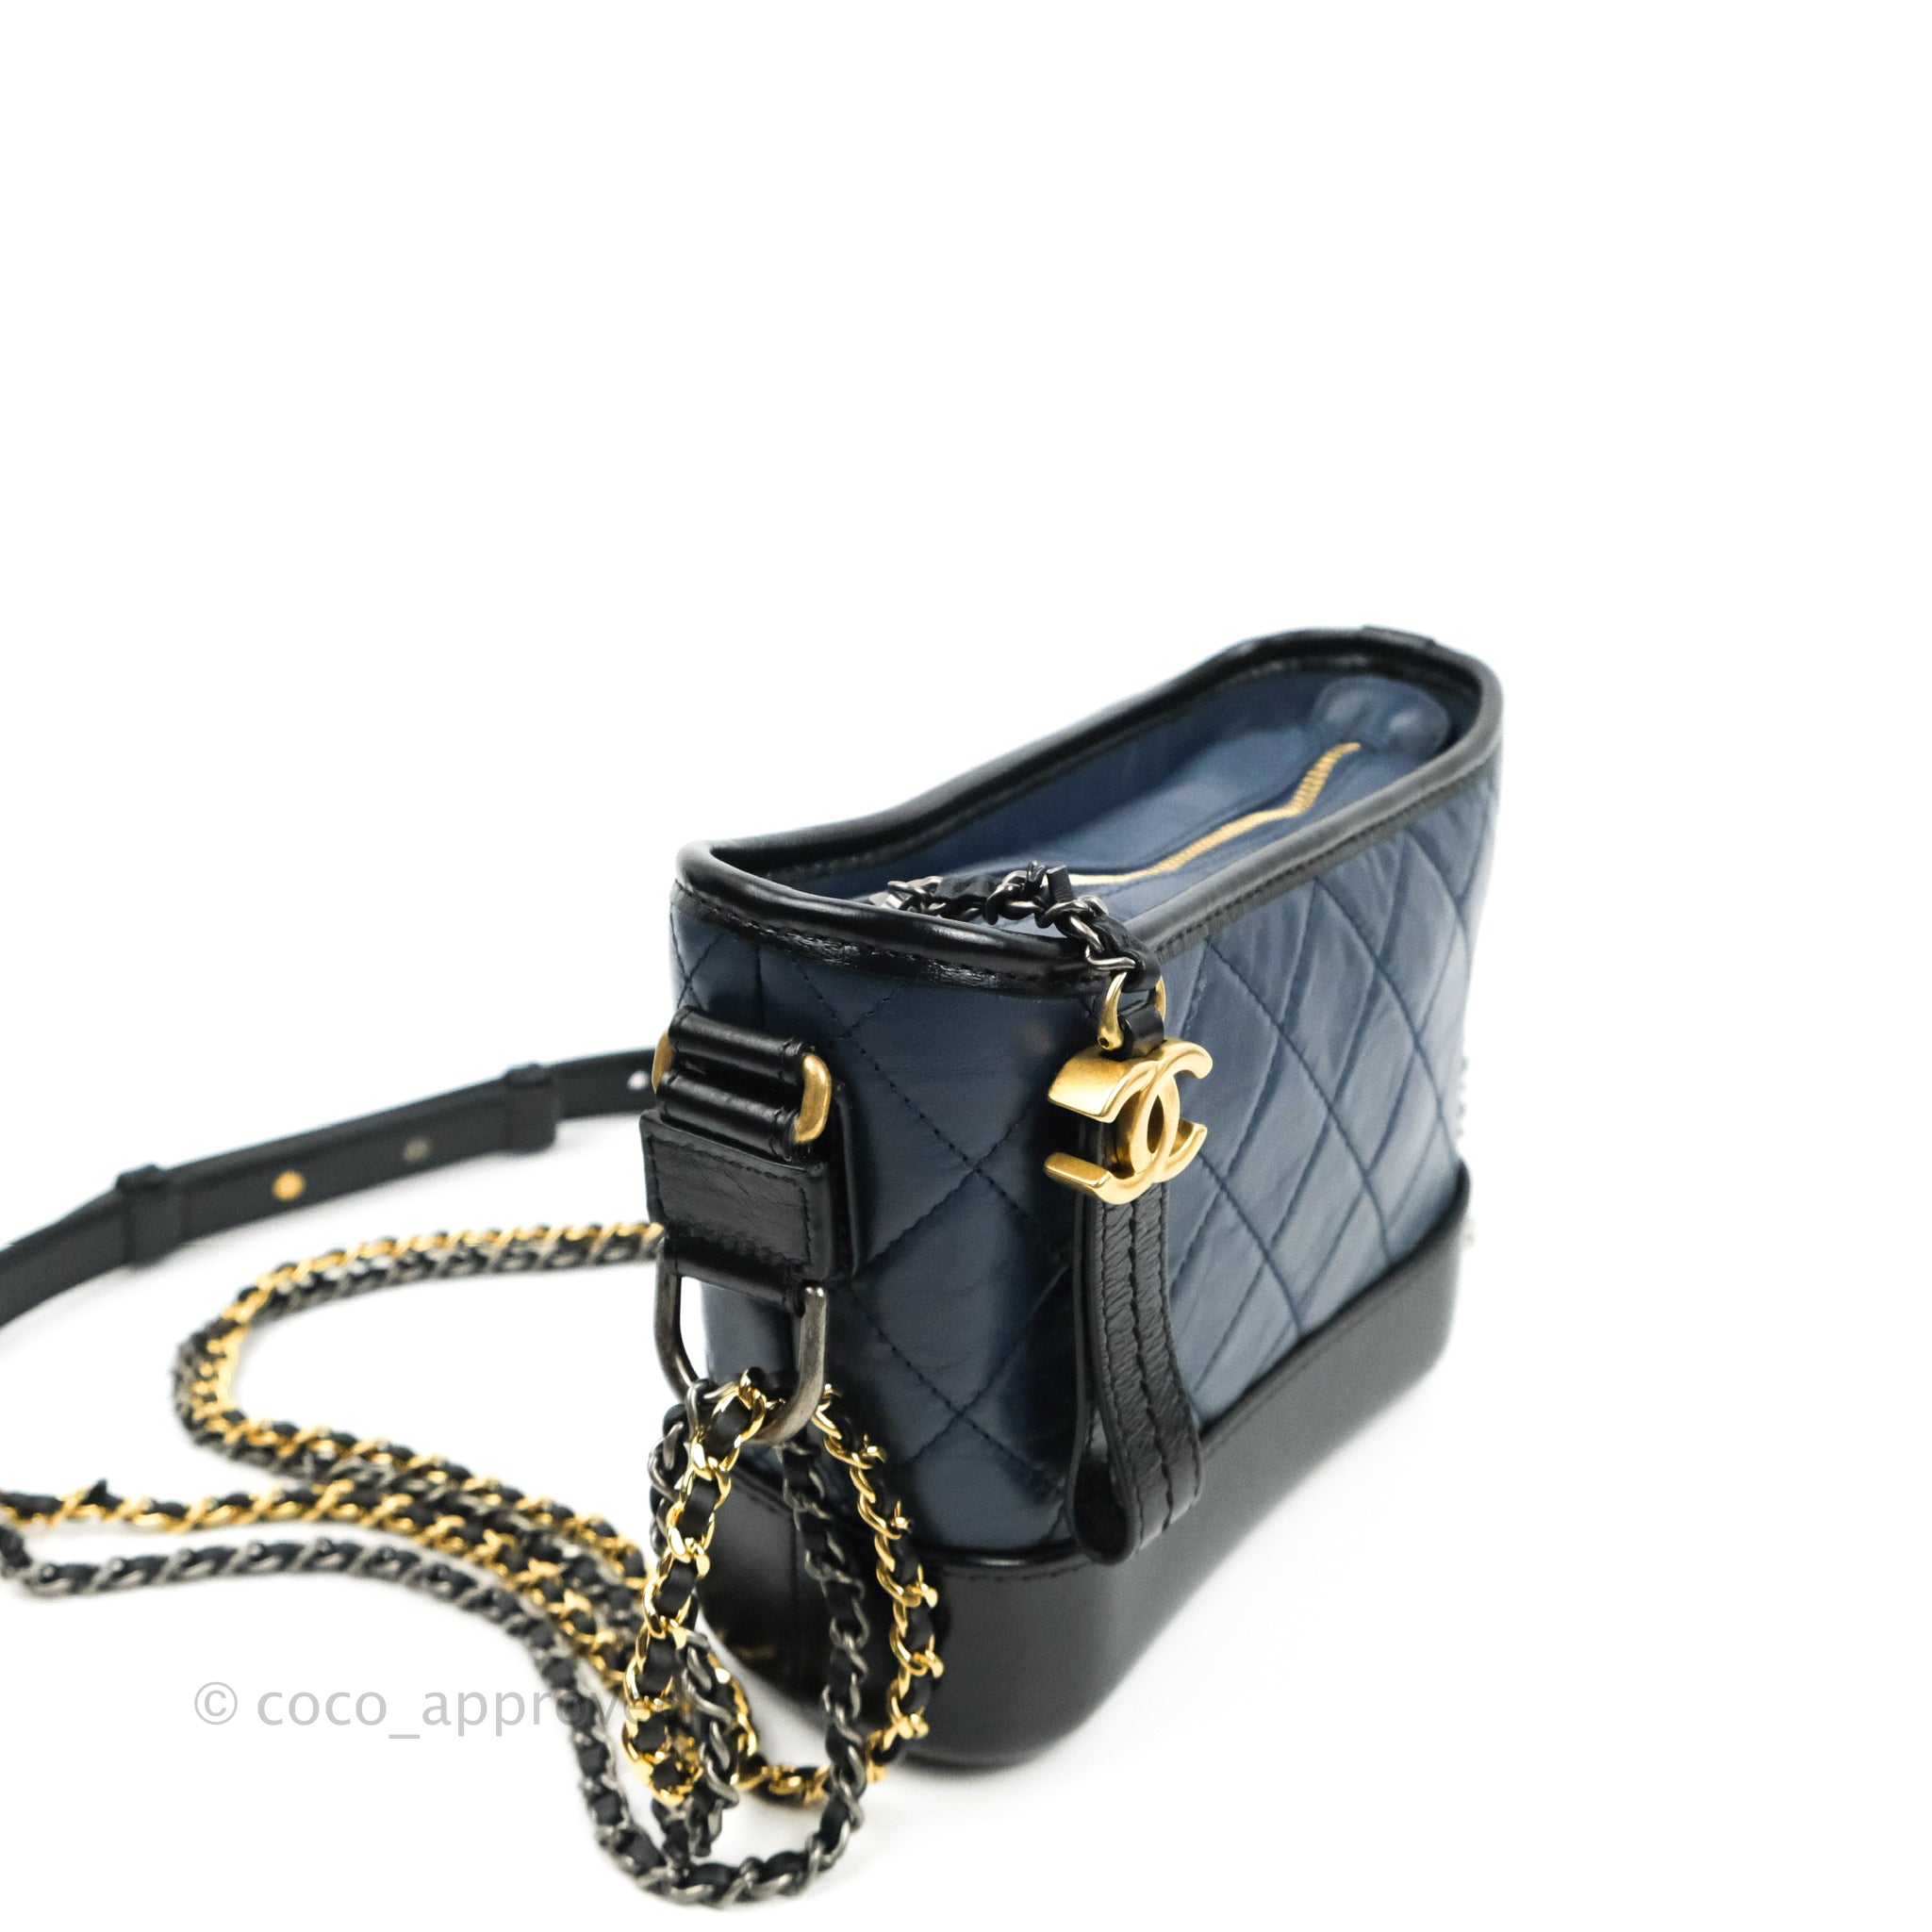 Gabrielle Chanel bag — PAM